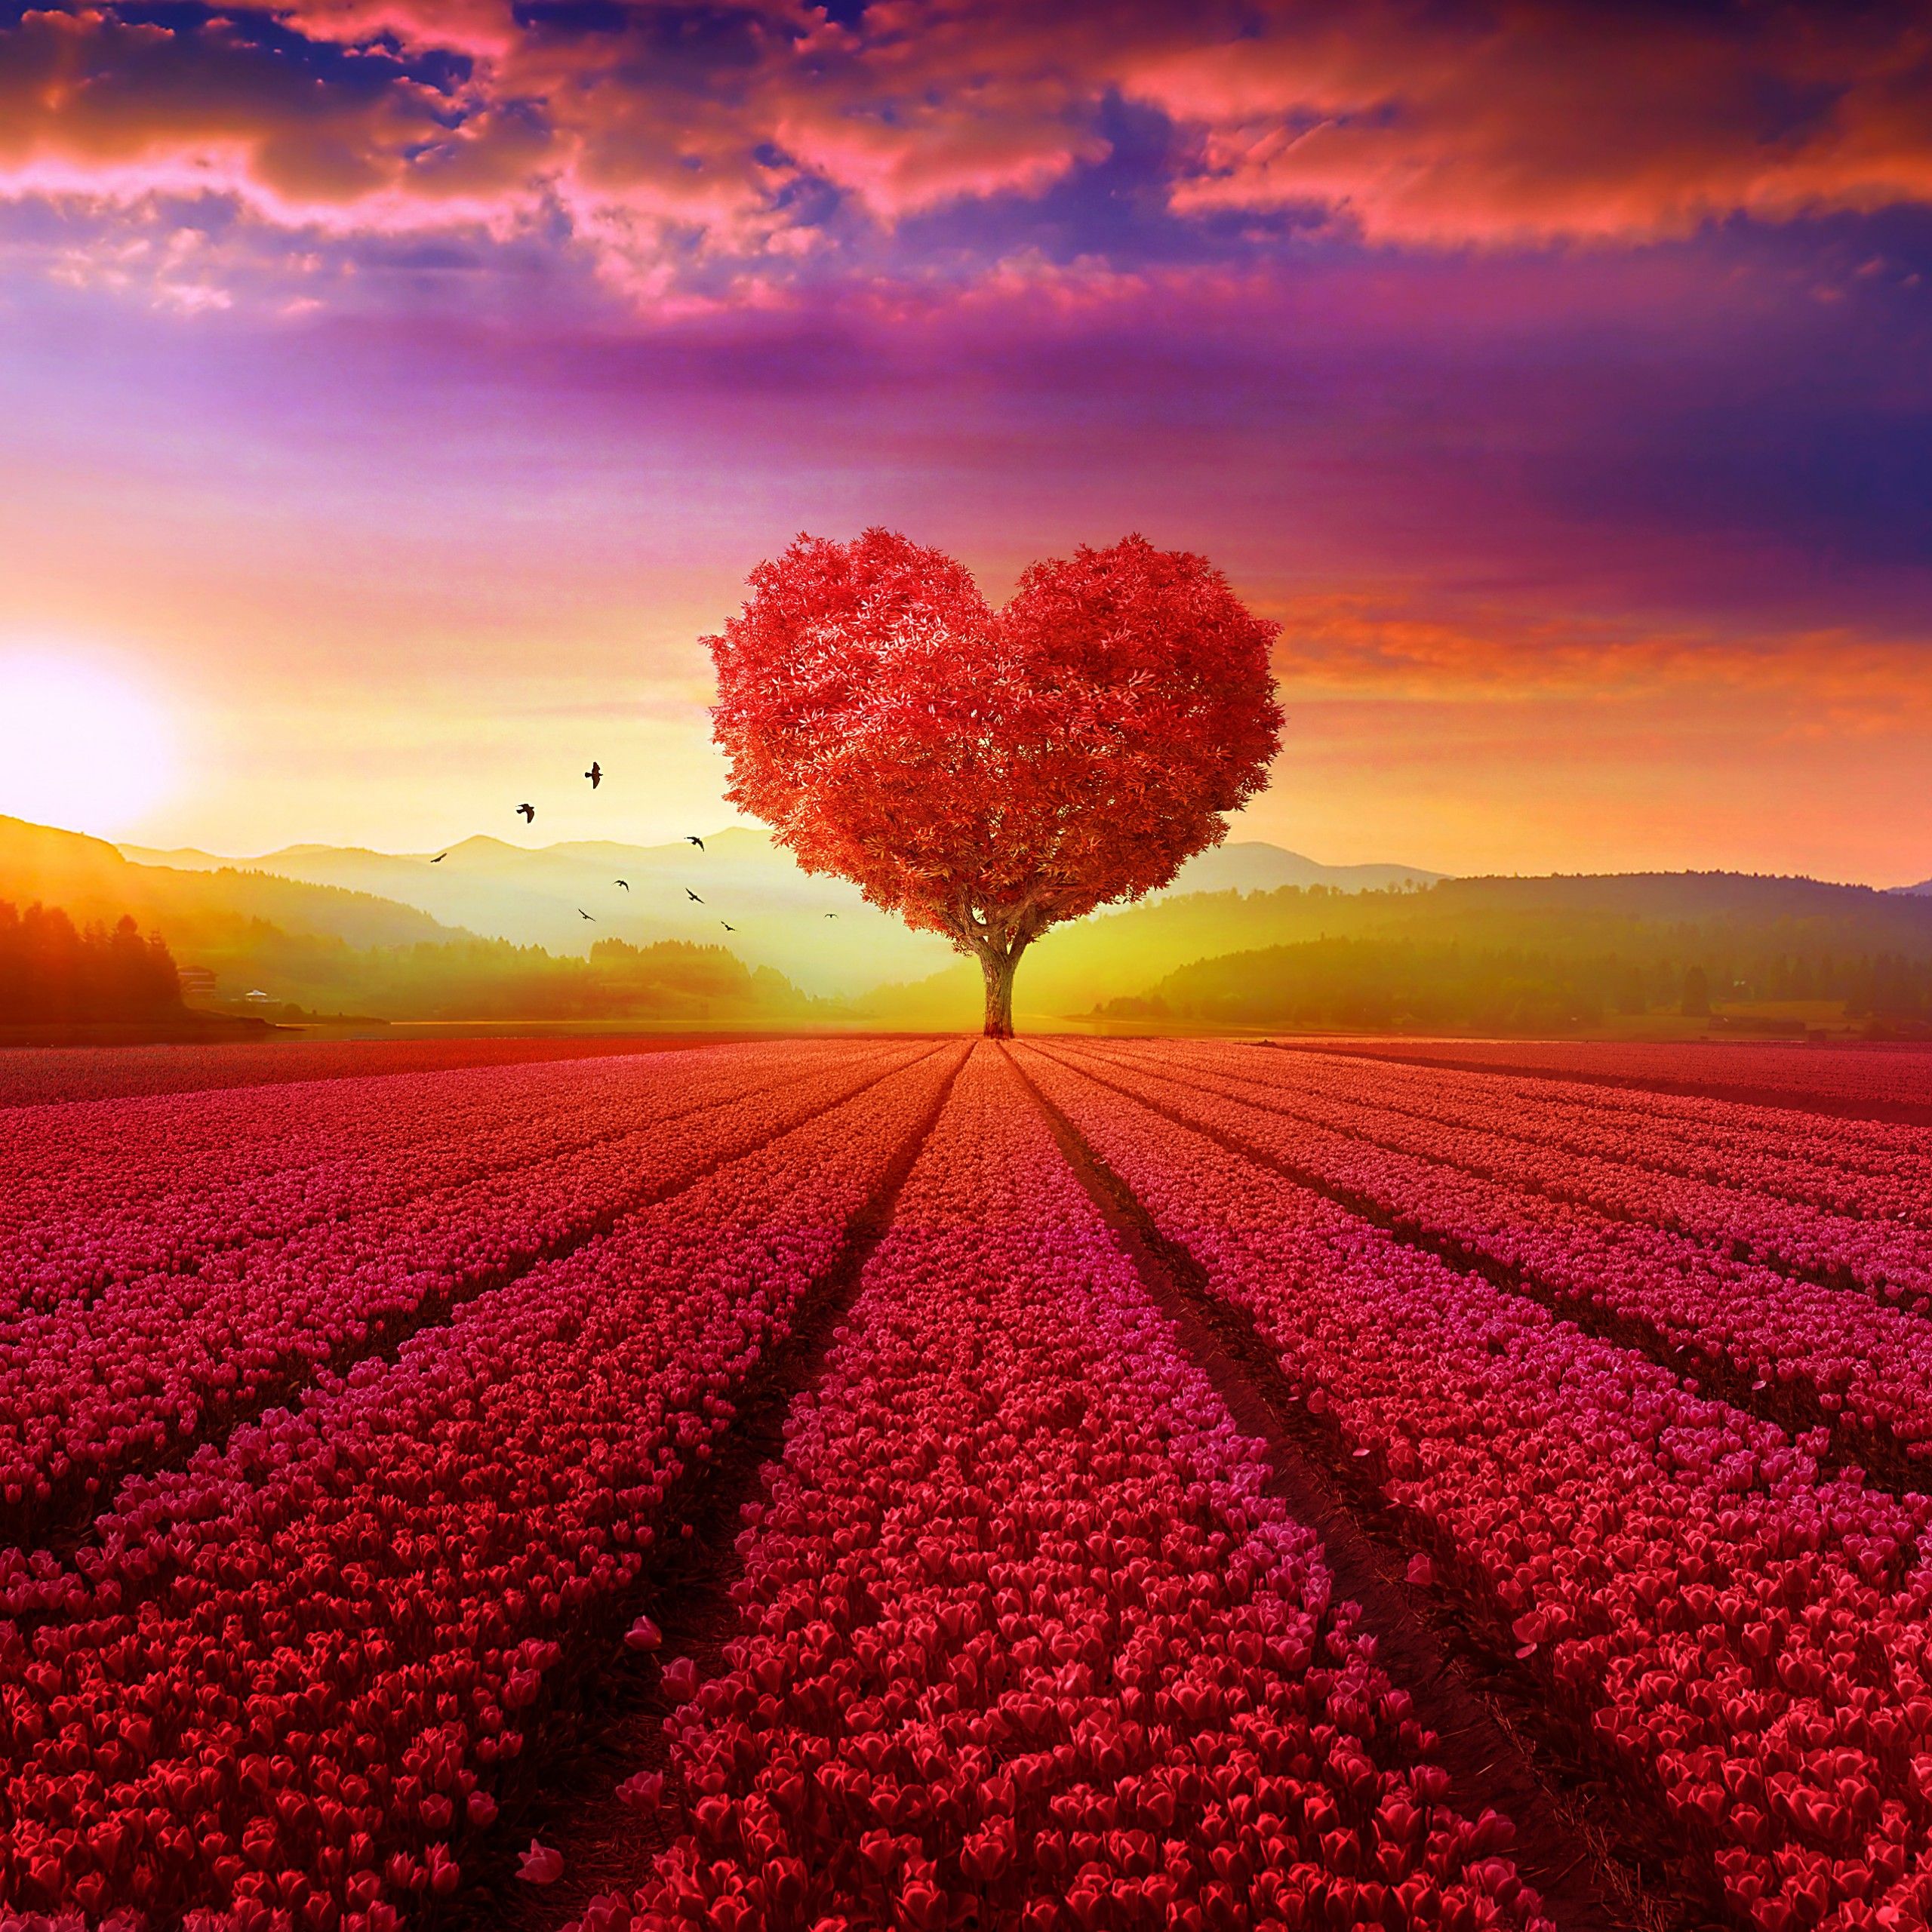 Wallpaper Love heart, Tree, Flower garden, Heart tree, Sunrise